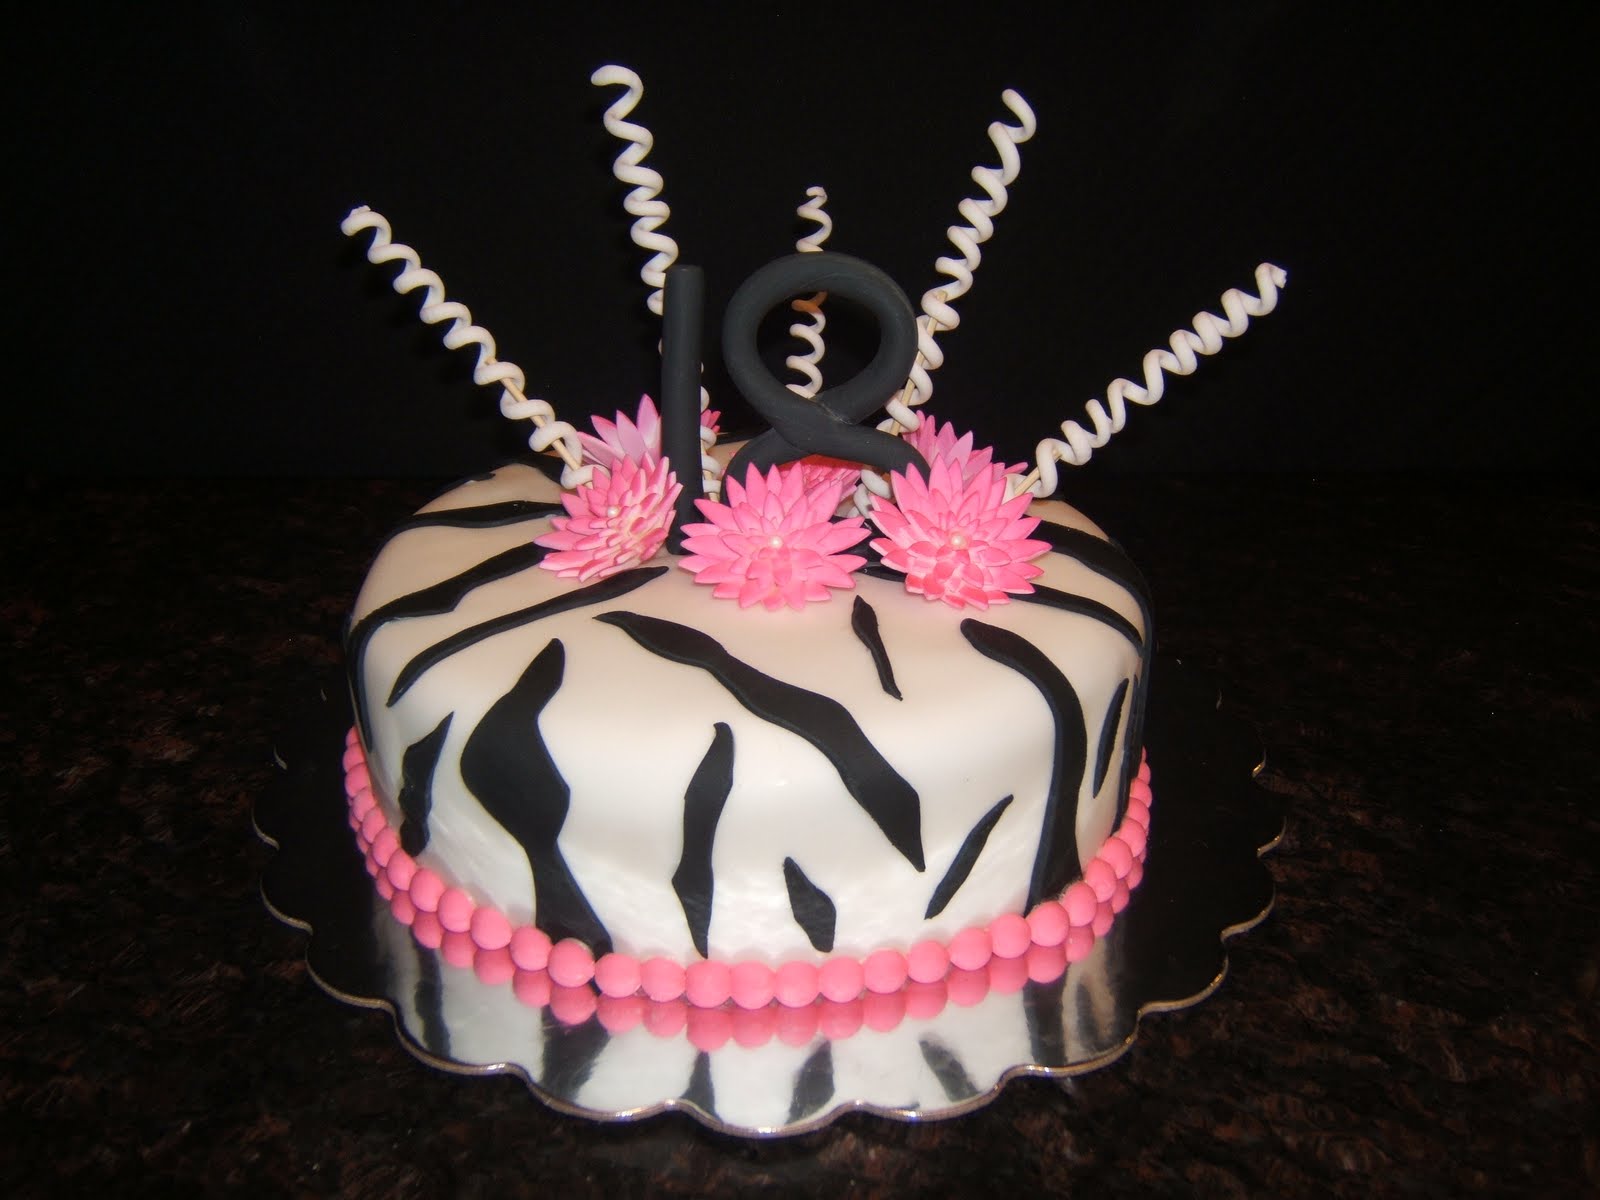 Cakes by Debbie: 18th Birthday Cake